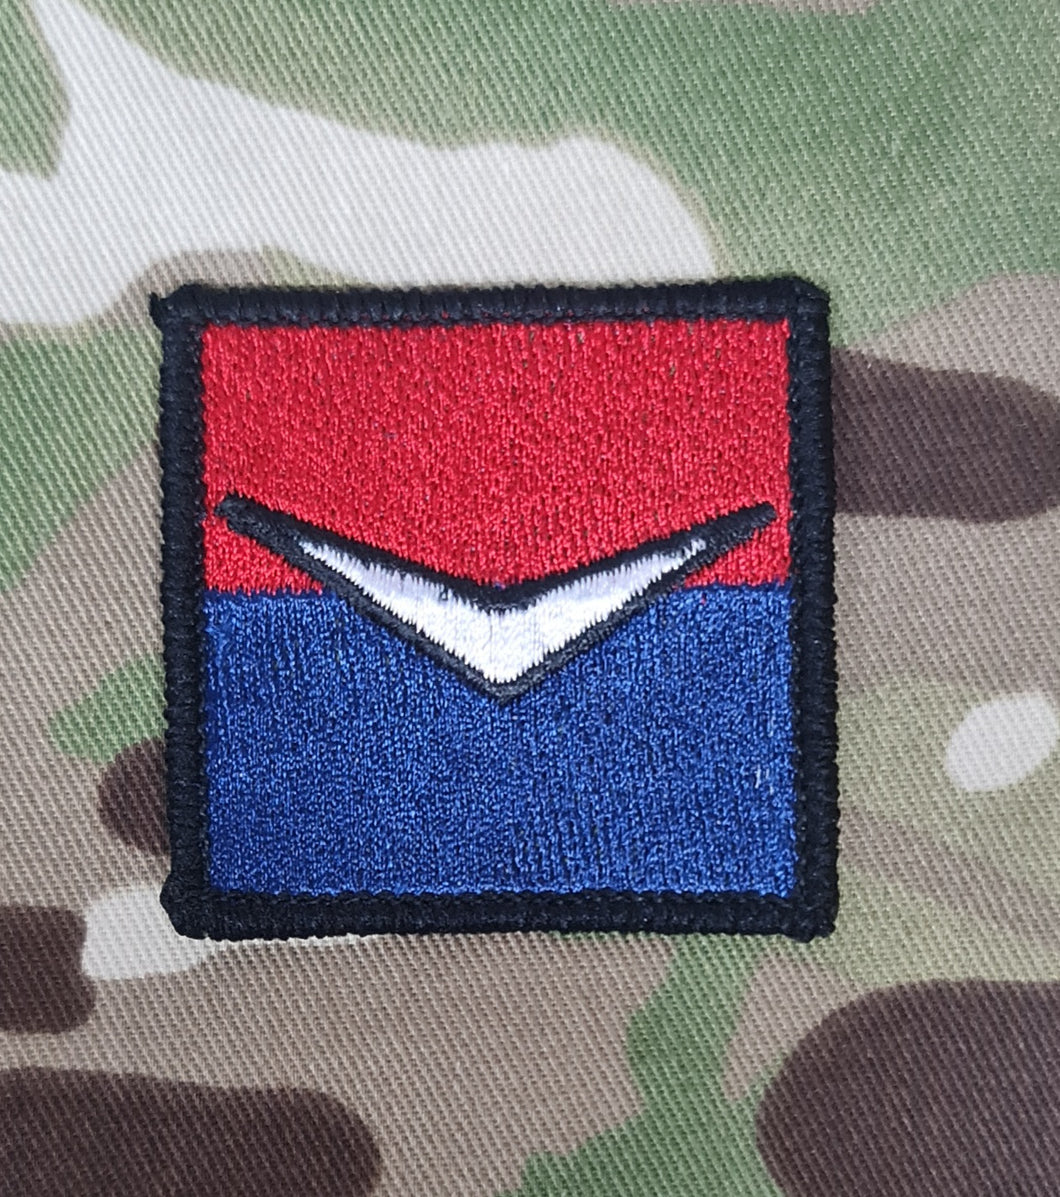 Royal Artillery UAV / Drone (Unmanned Aerial Vehicle) Badge